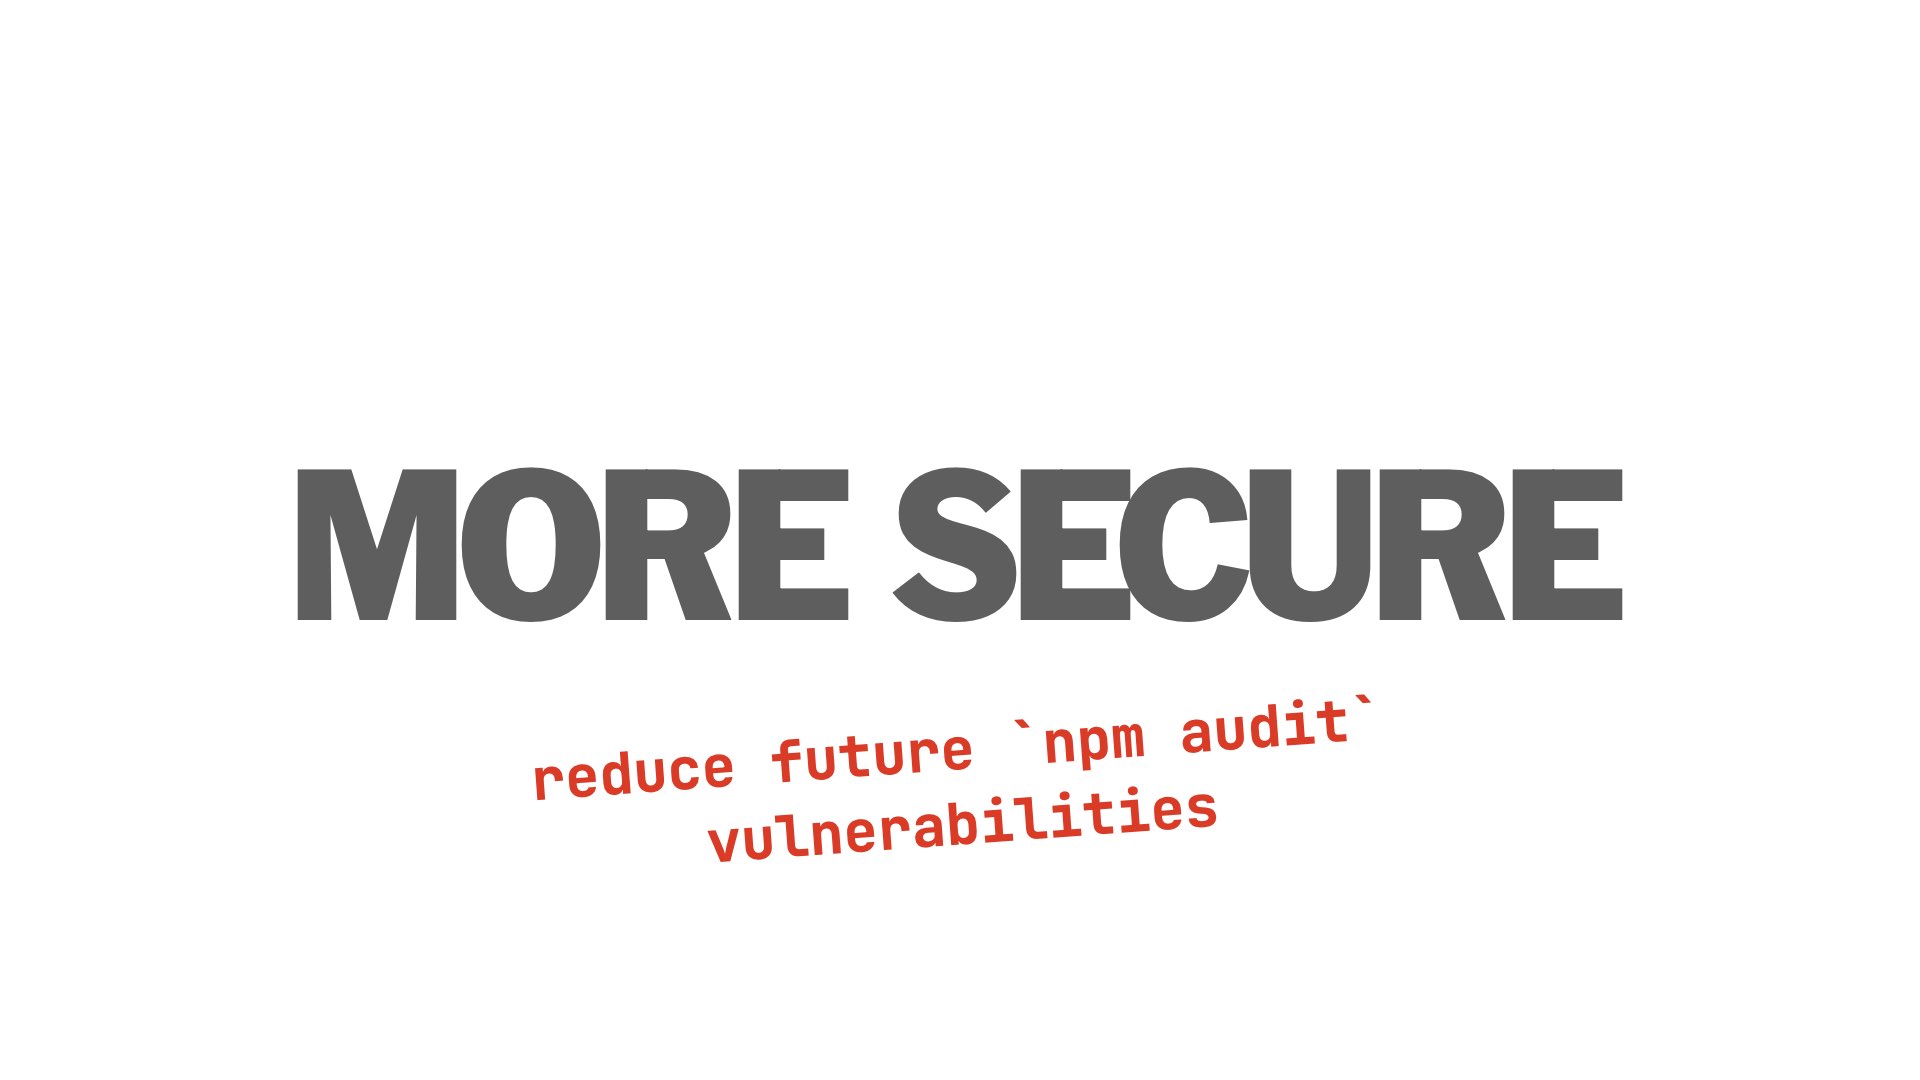 More secure: reduce future npm audit vulnerabilities